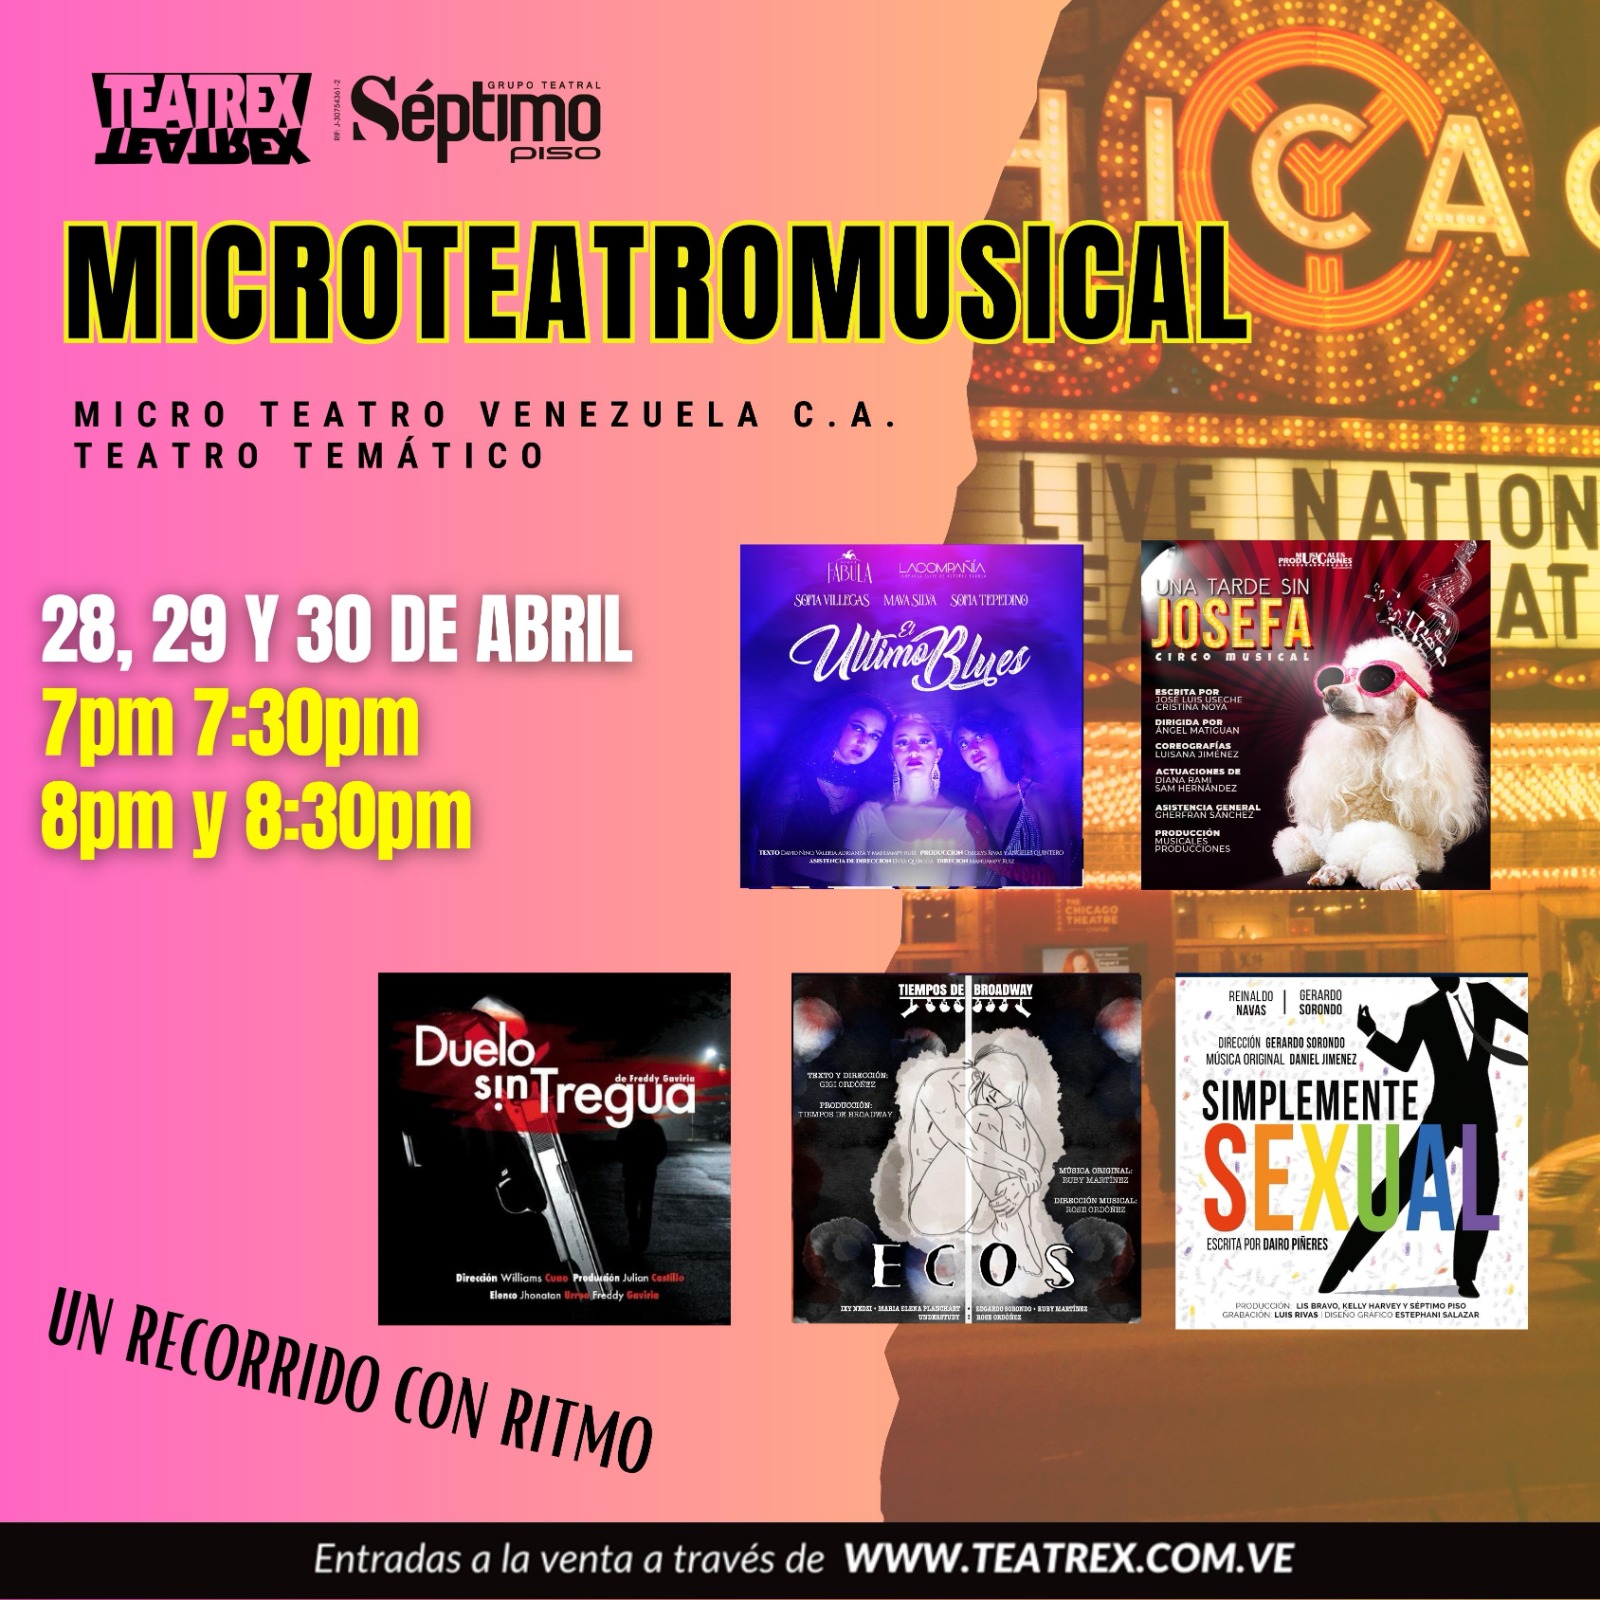 Microteatro Musical en Teatrex